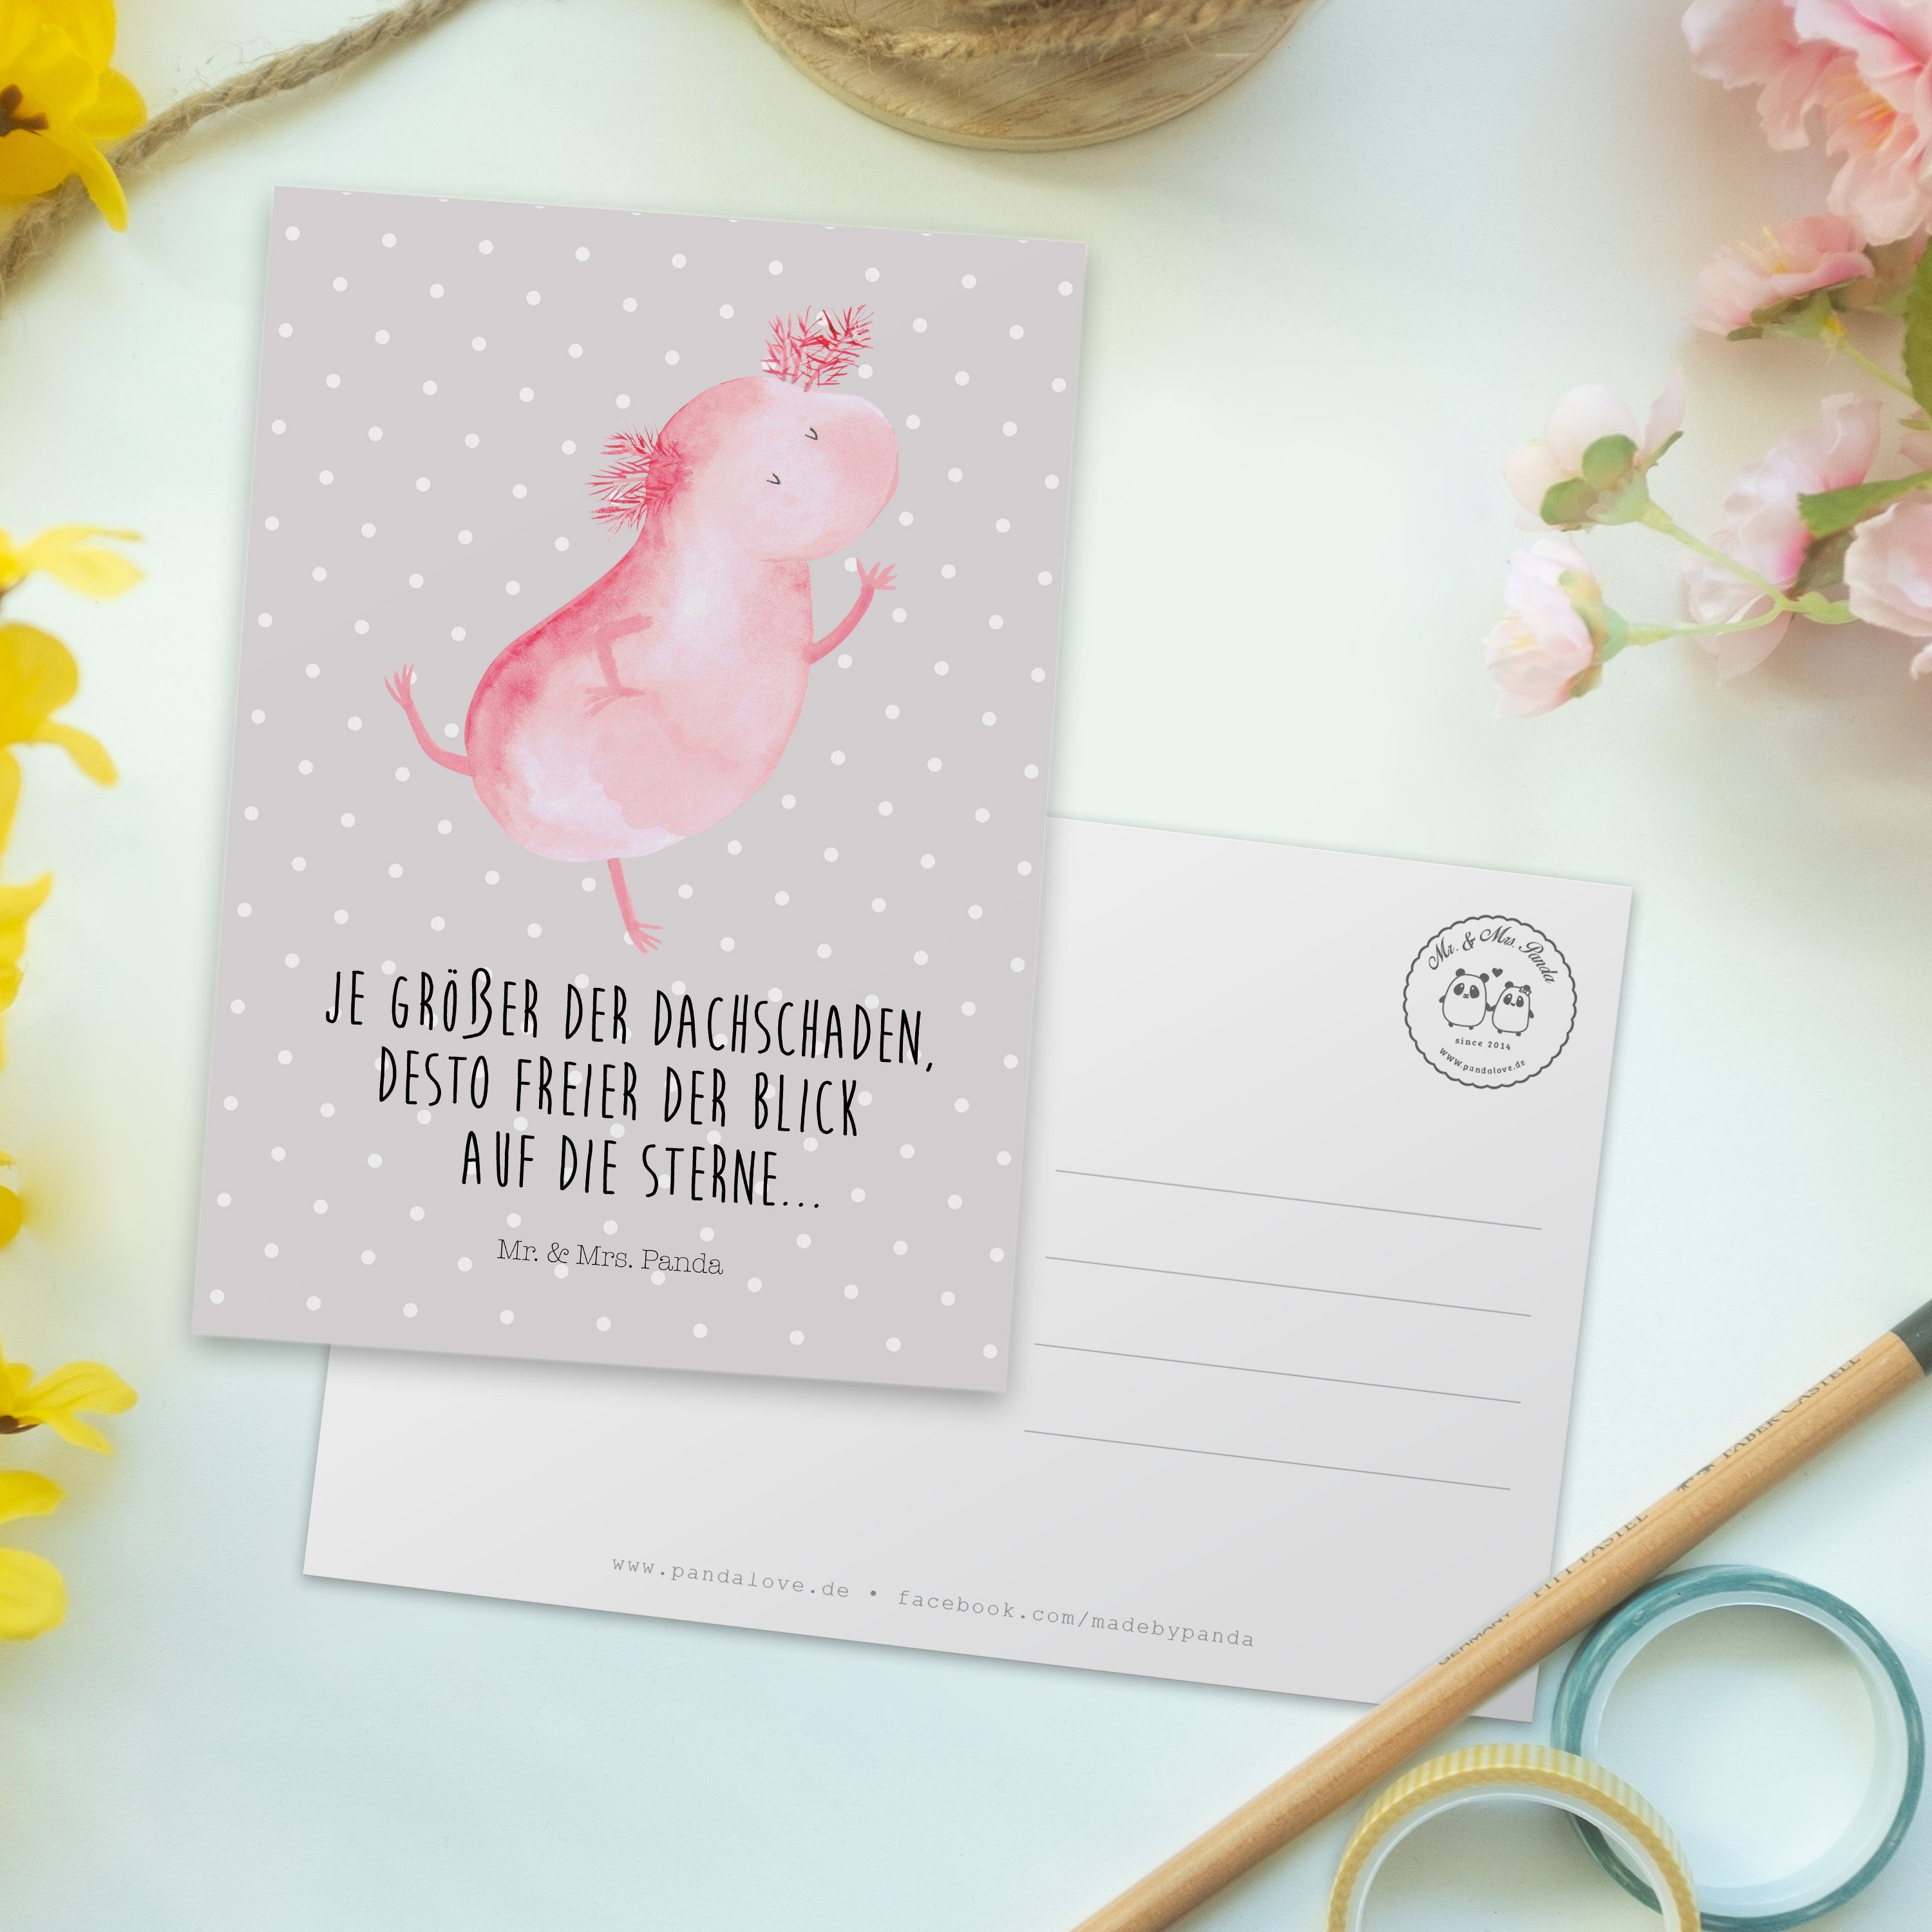 Mr. & Mrs. Panda Postkarte tanzt Geschenk, - Amphibie, Axolotl Pastell - Grau Karte Dankeskarte